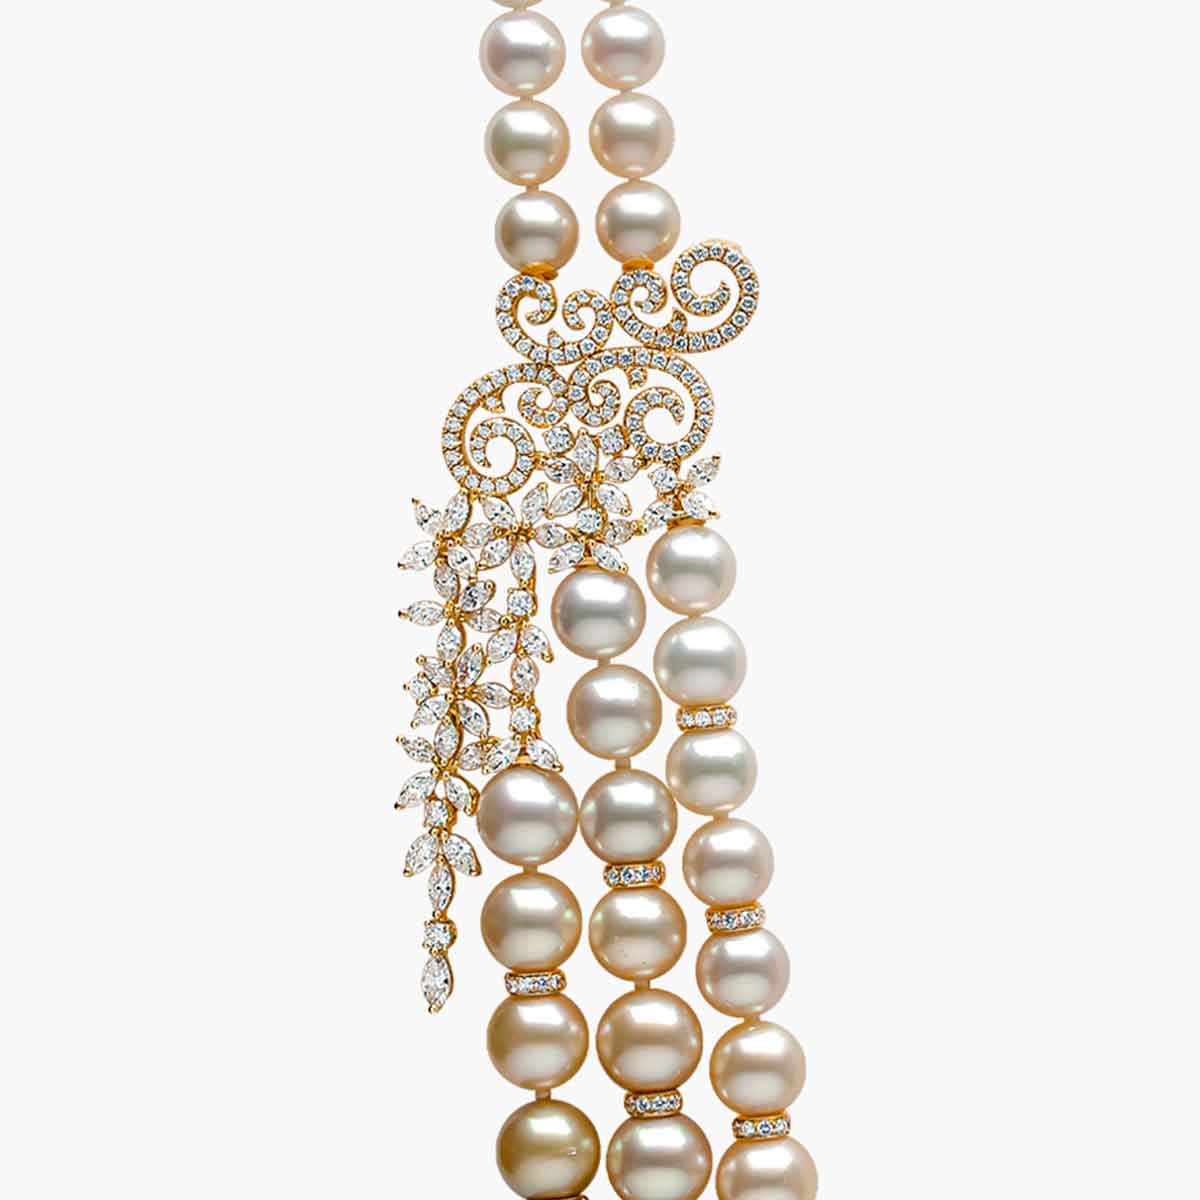 Ombré 18K Gold South Sea Pearl Necklace